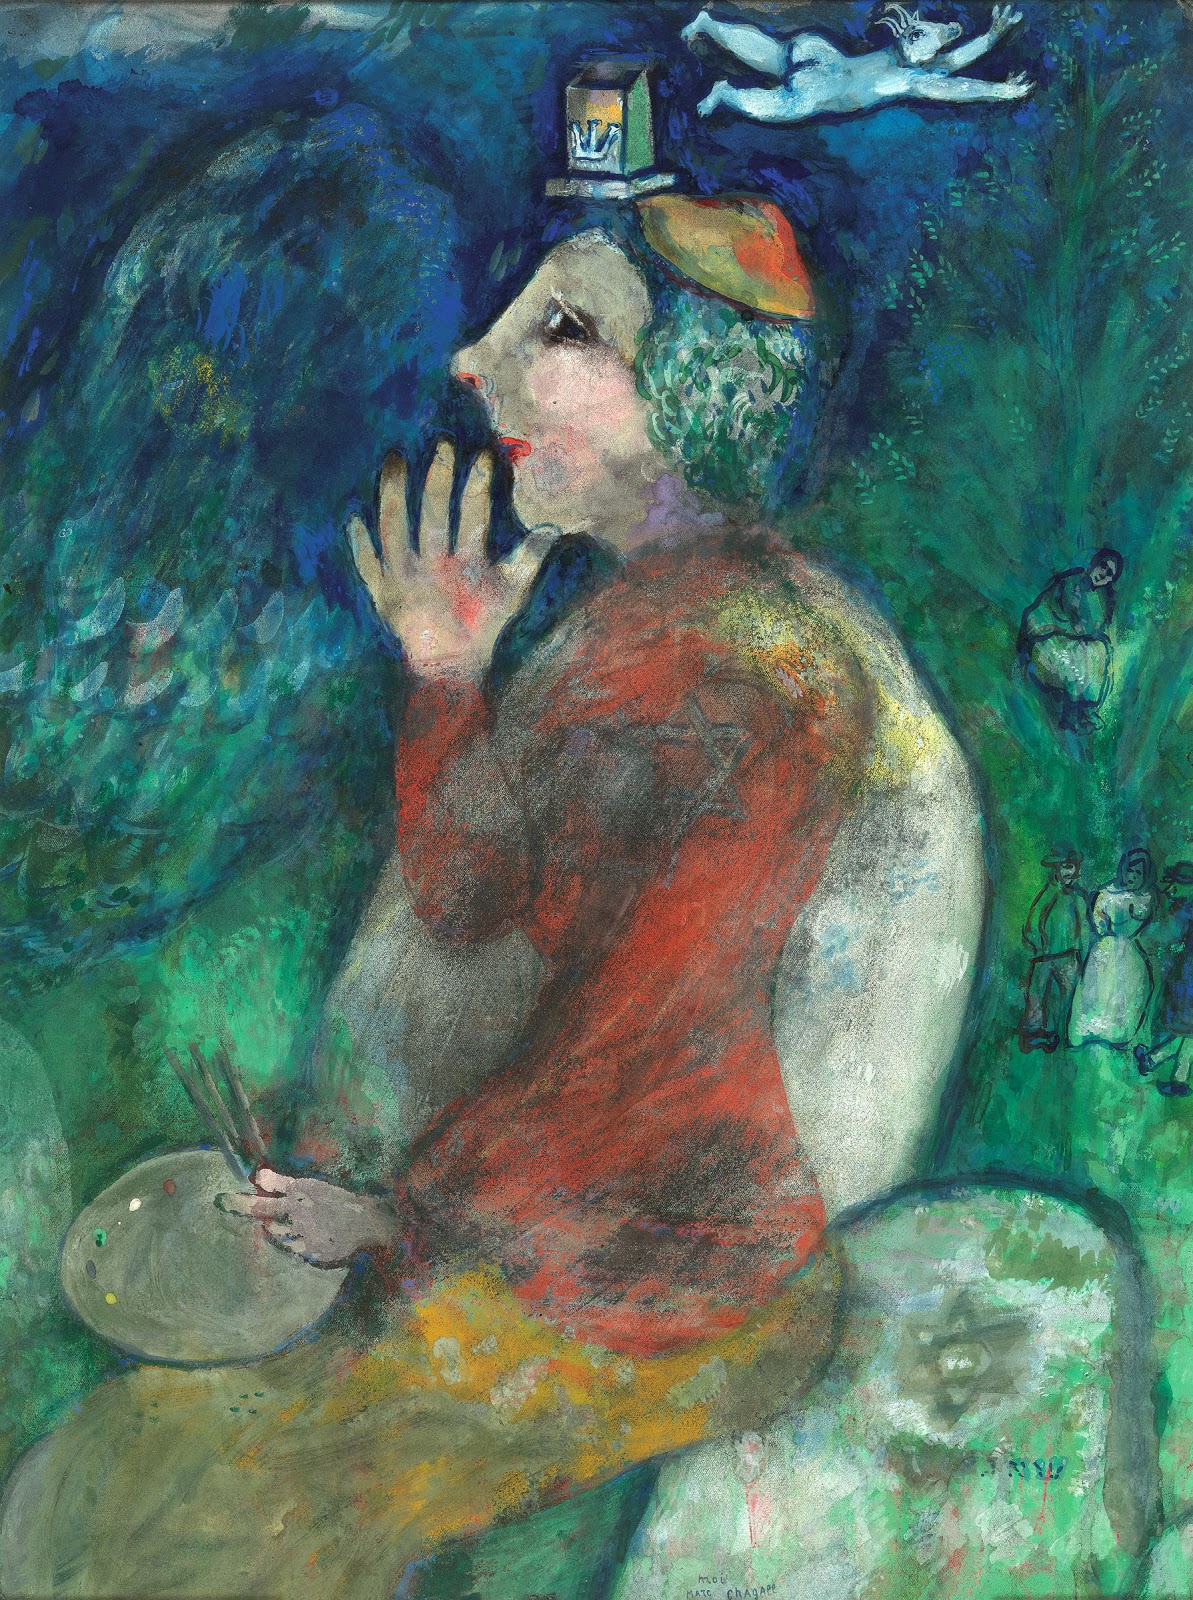 Marc+Chagall-1887-1985 (391).jpg